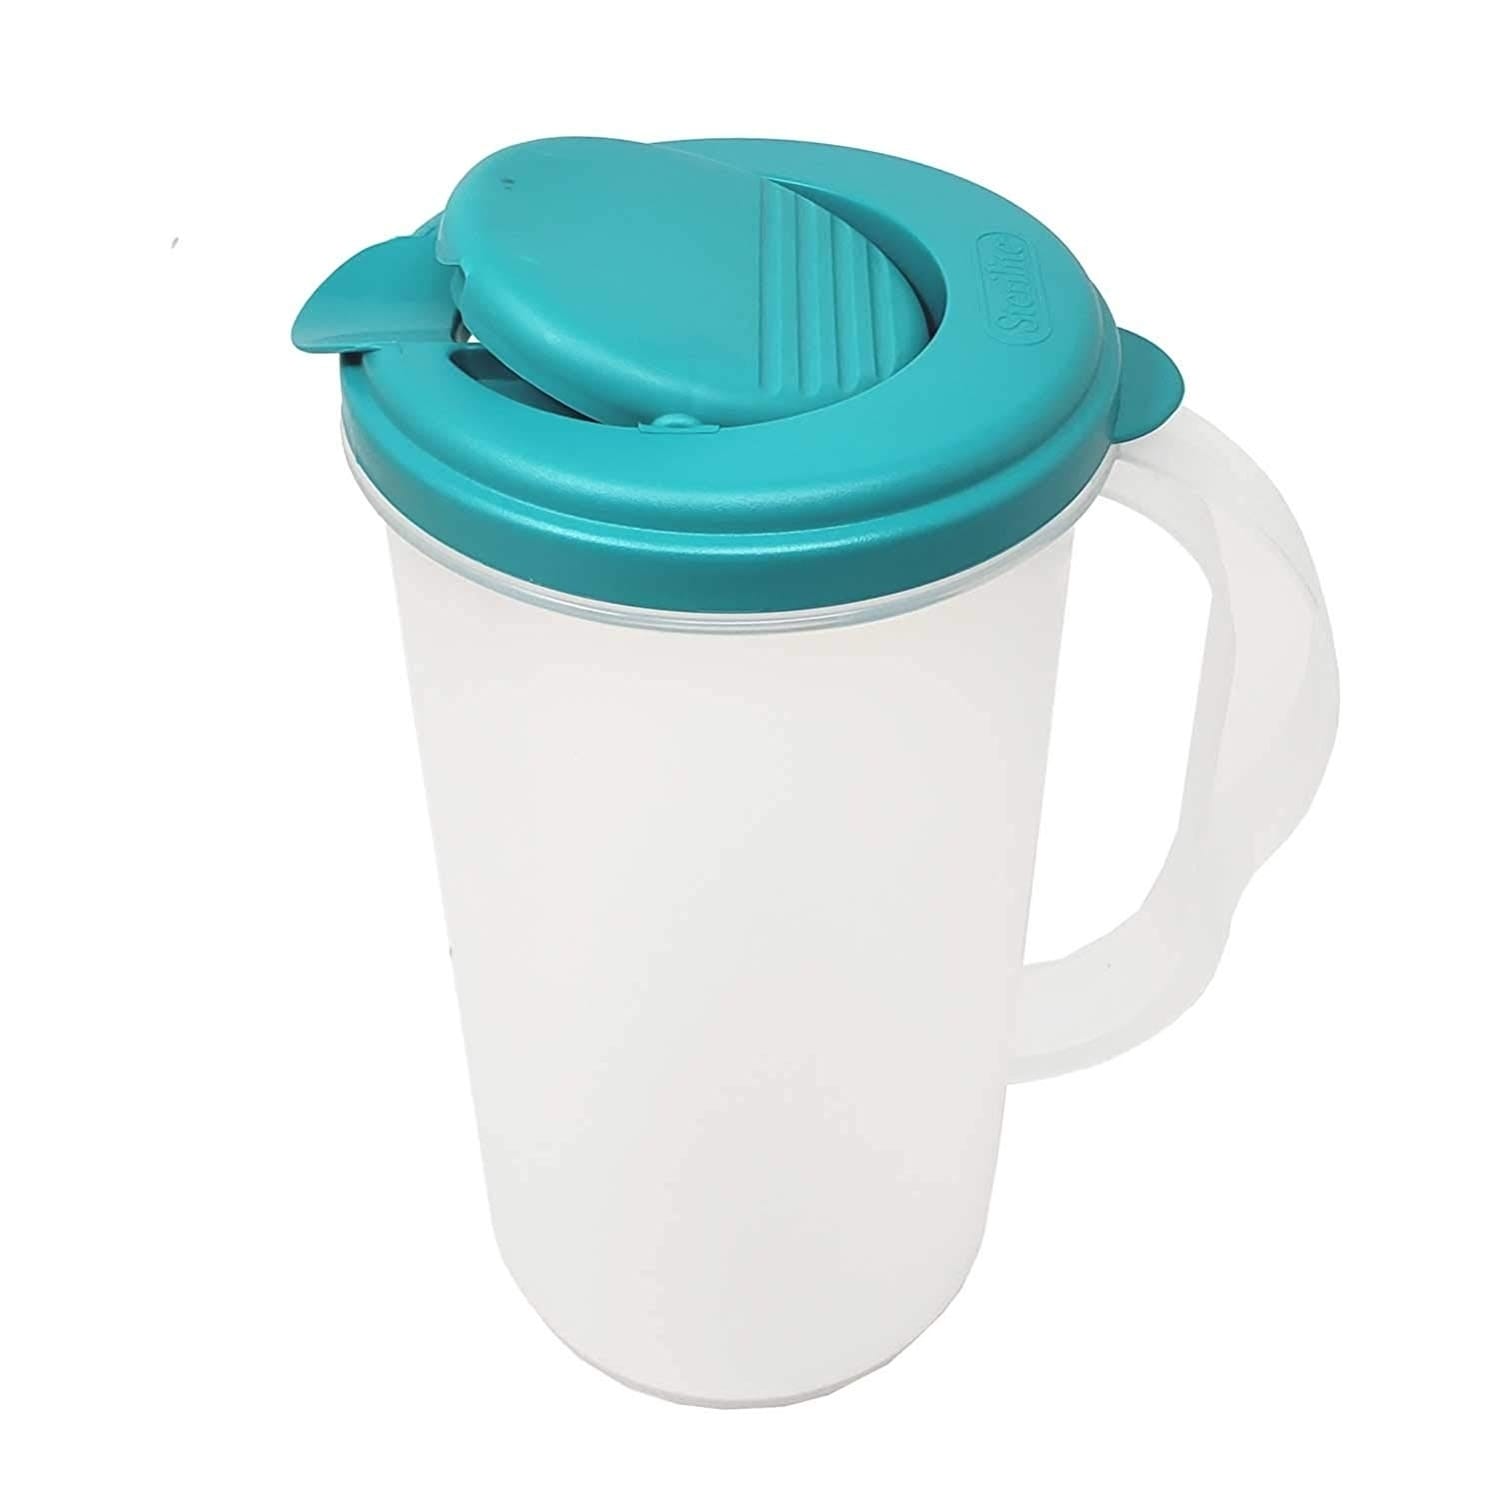 2 gallon water filter pitcher